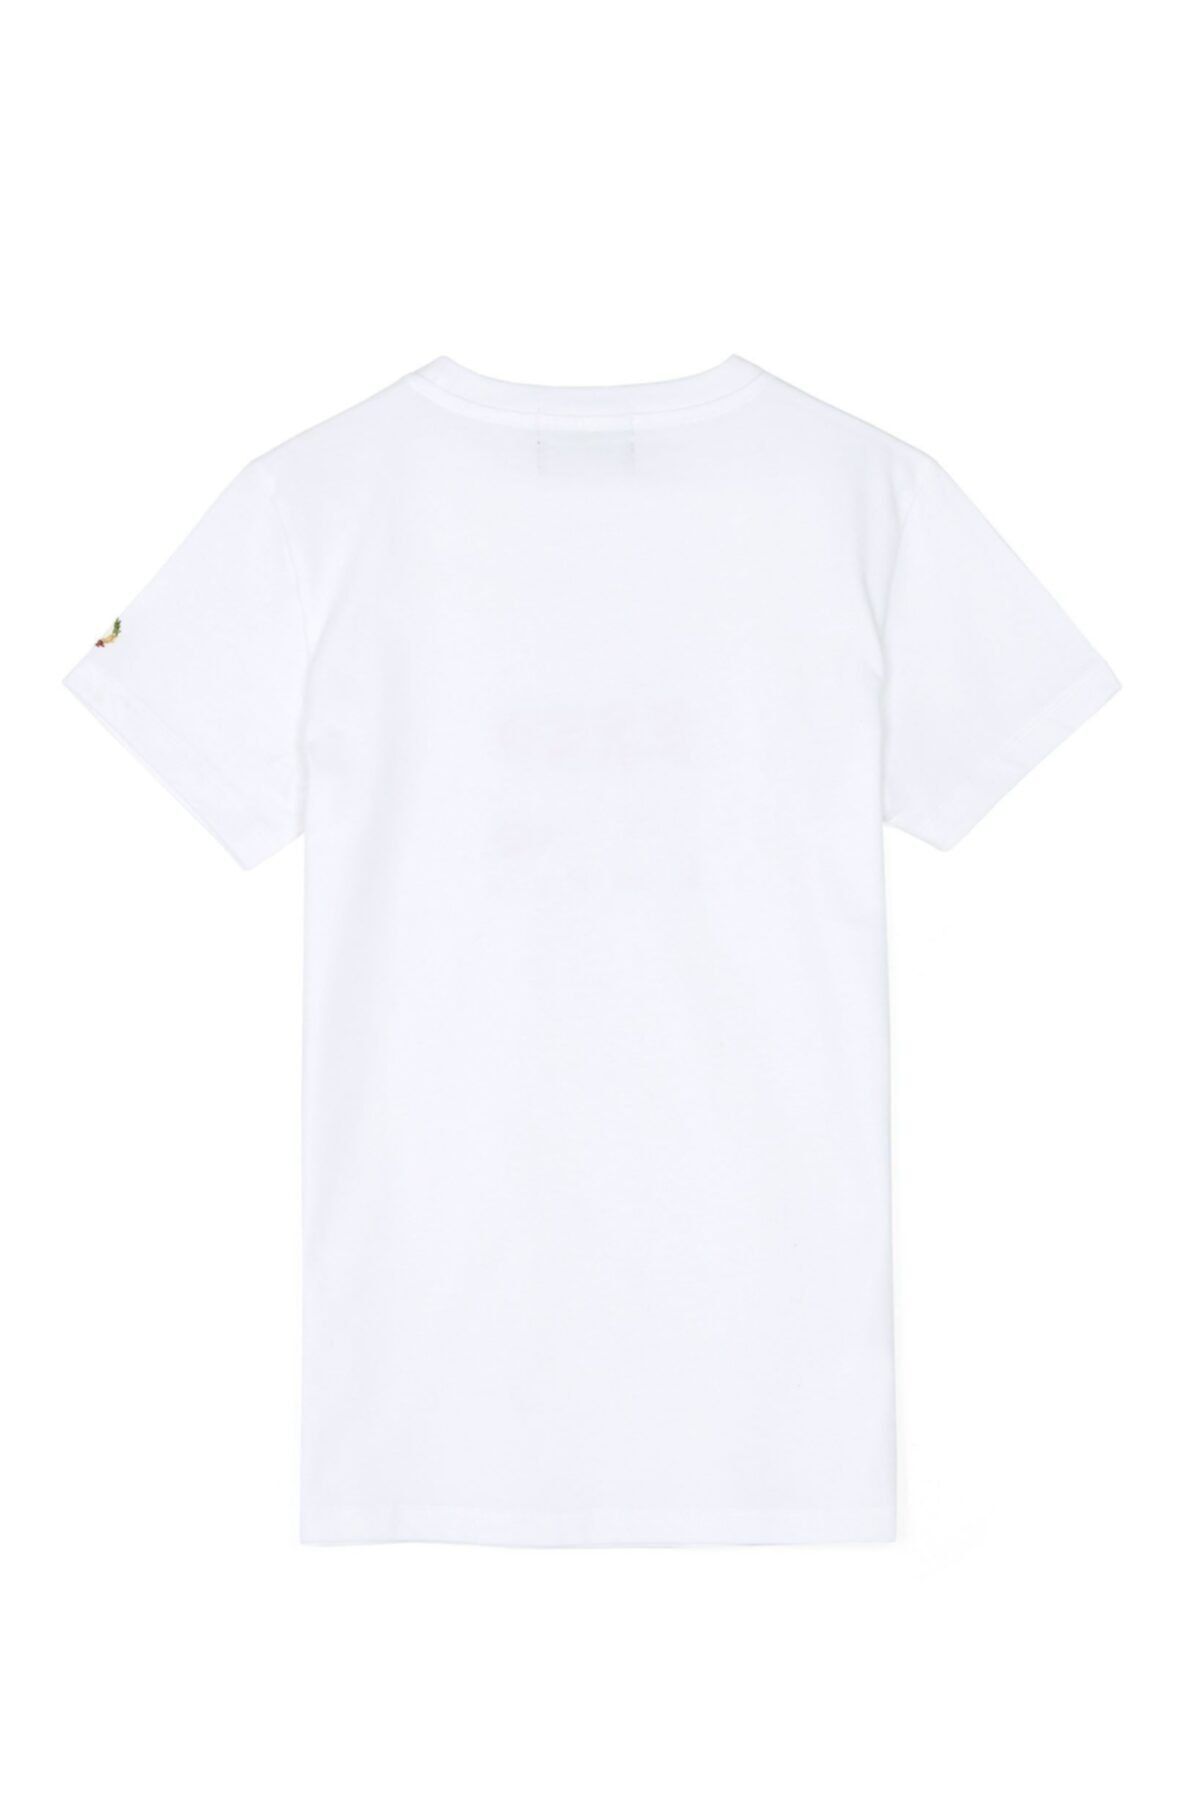 Fred Perry Kadın Beyaz T-Shirt 181FRPKTSH2207_F100